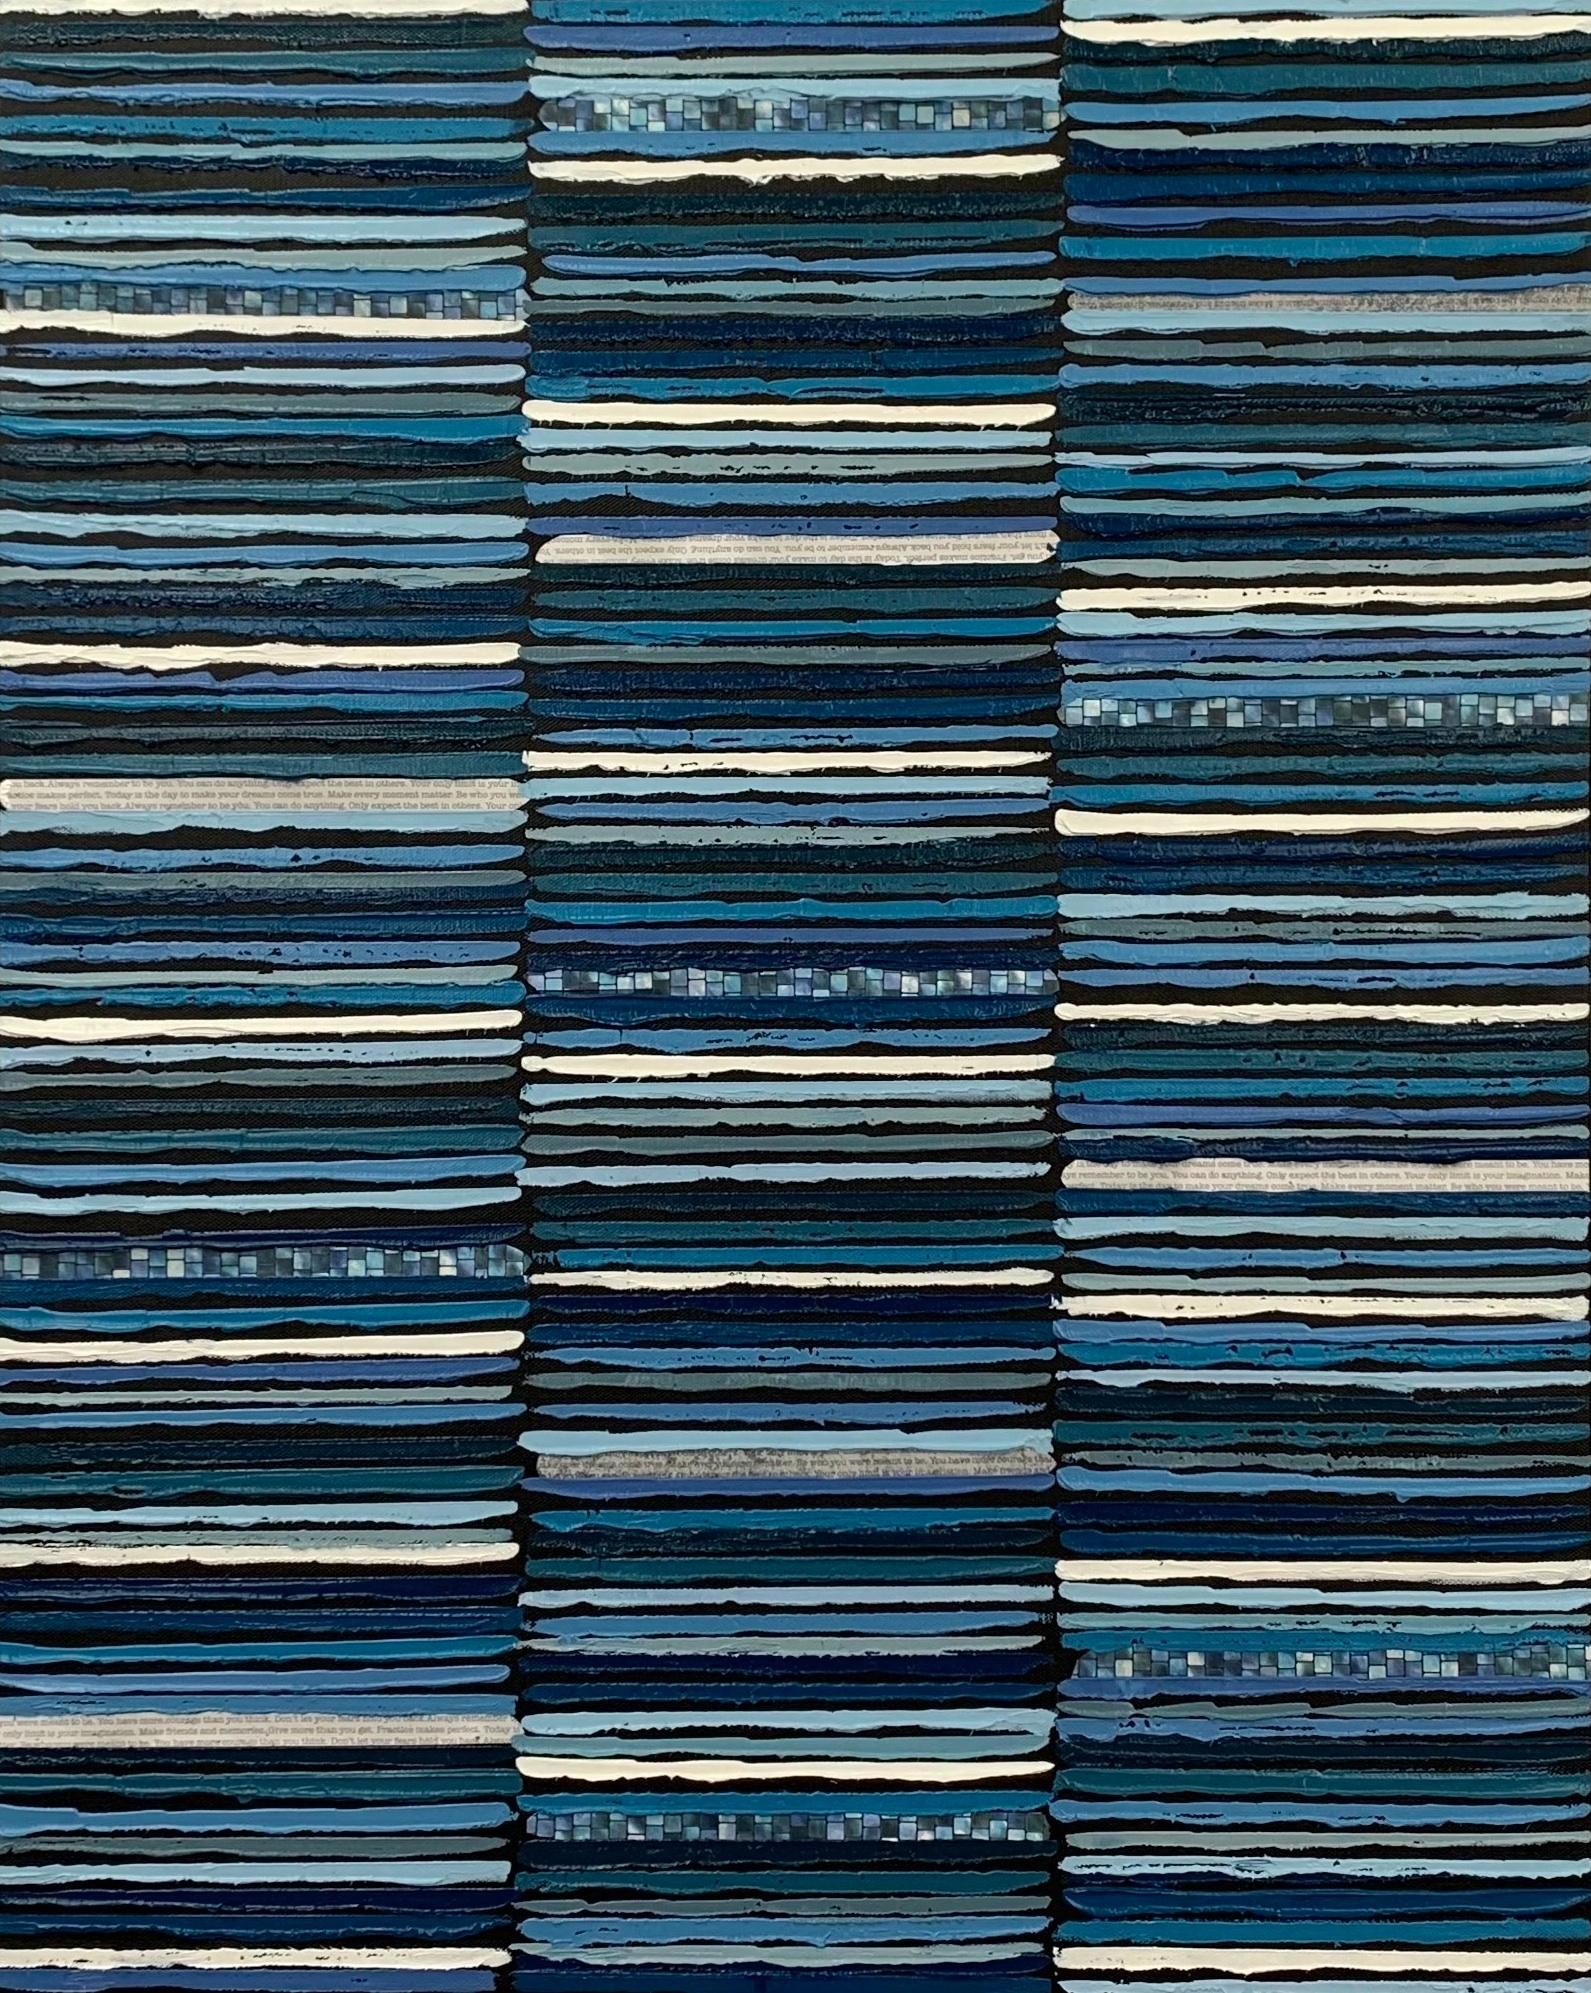 Stripes marines, peinture abstraite - Mixed Media Art de Janet Hamilton